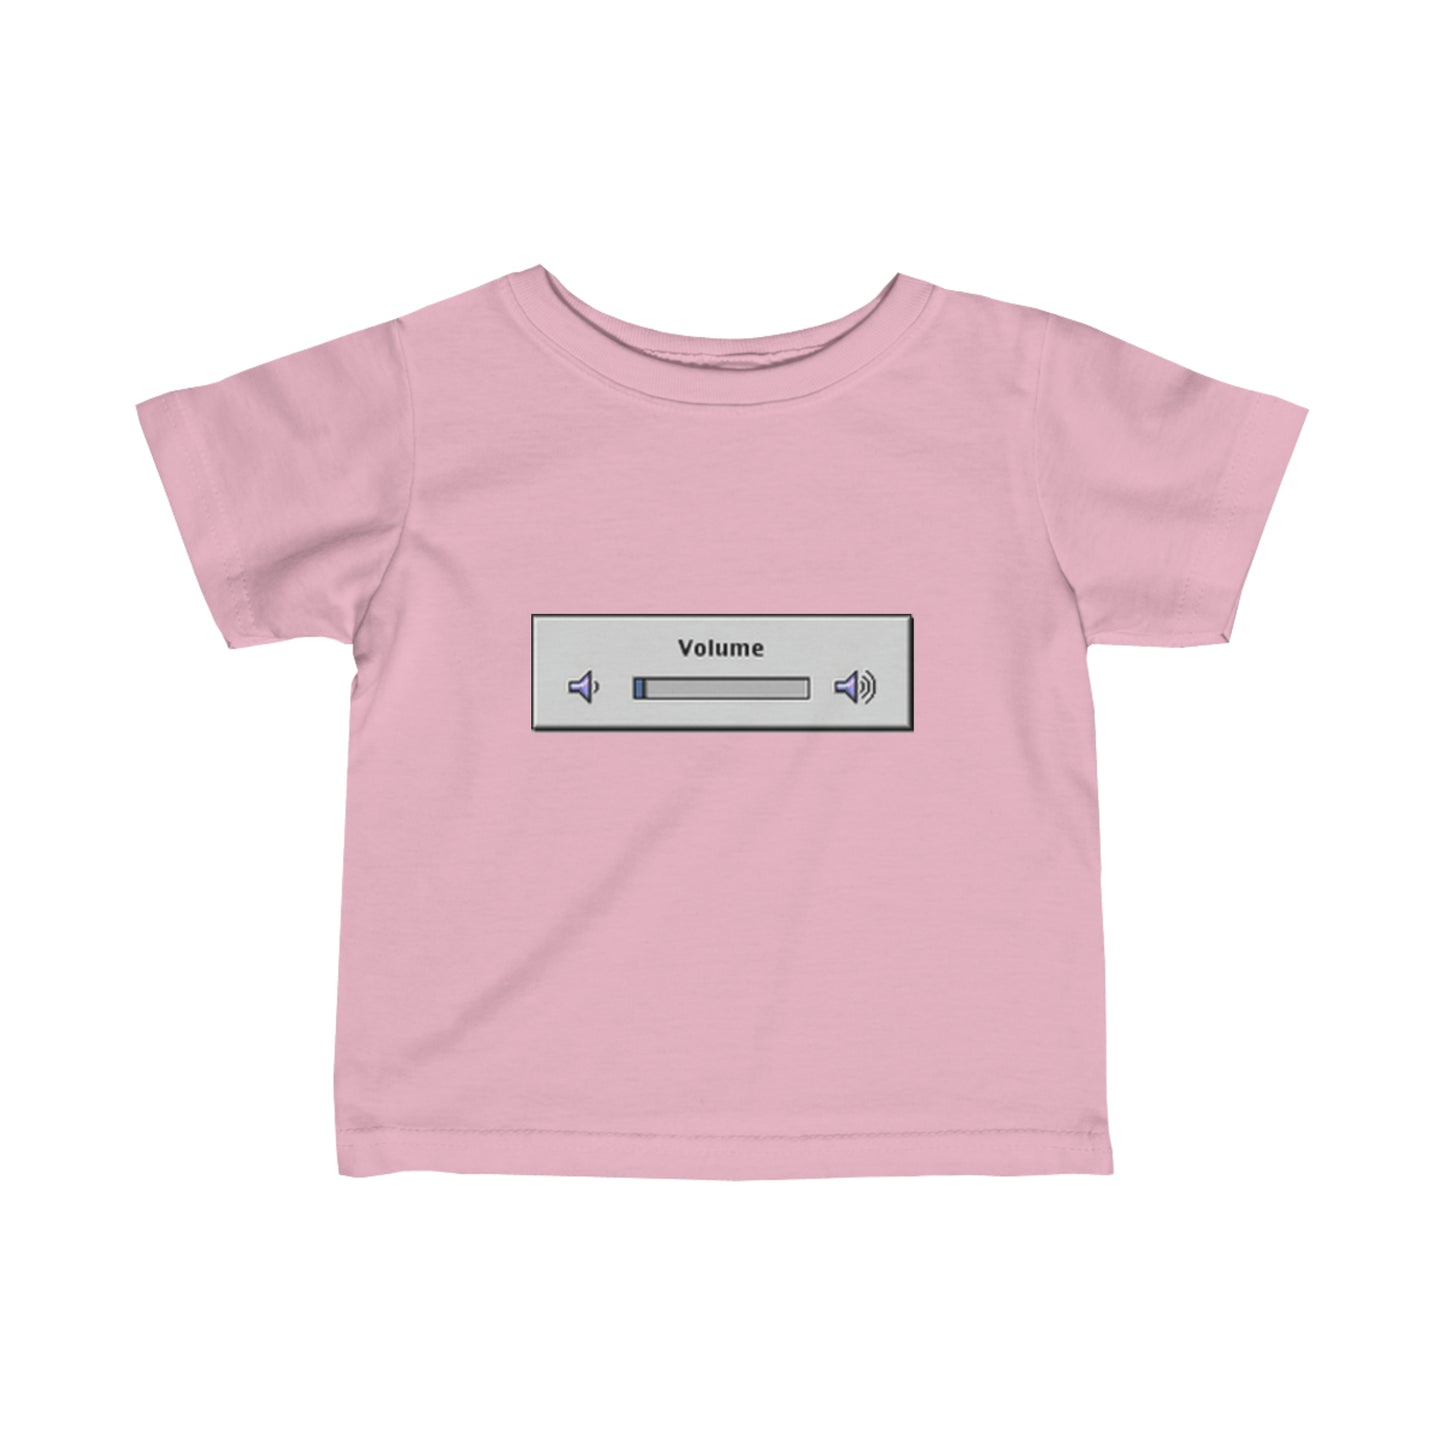 Volume Infant T-Shirt